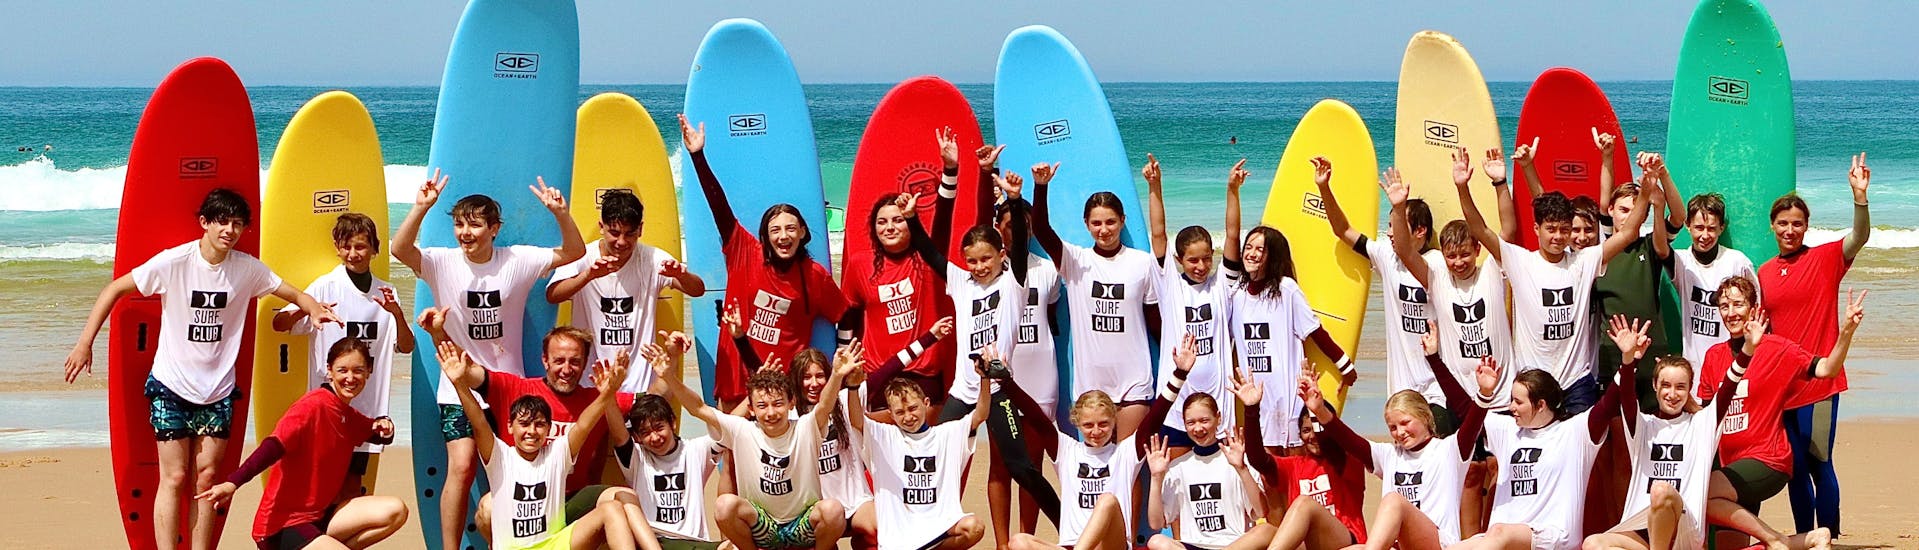 Surflessen in Lacanau vanaf 4 jaar voor alle niveaus.